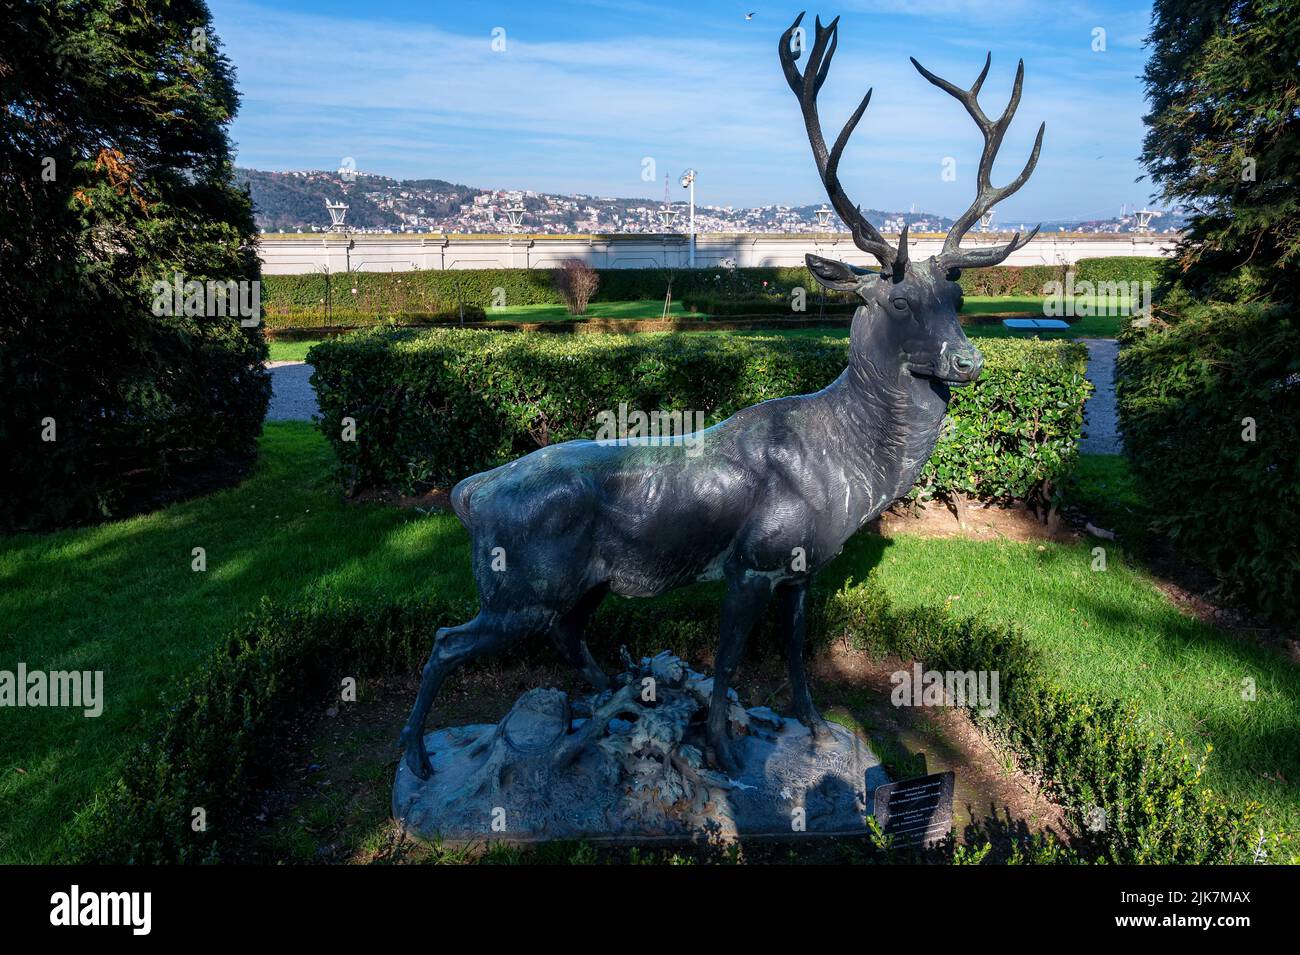 Deer Sculpture in the garden of Beylerbeyi Palace, Istanul, Turkey Stock Photo